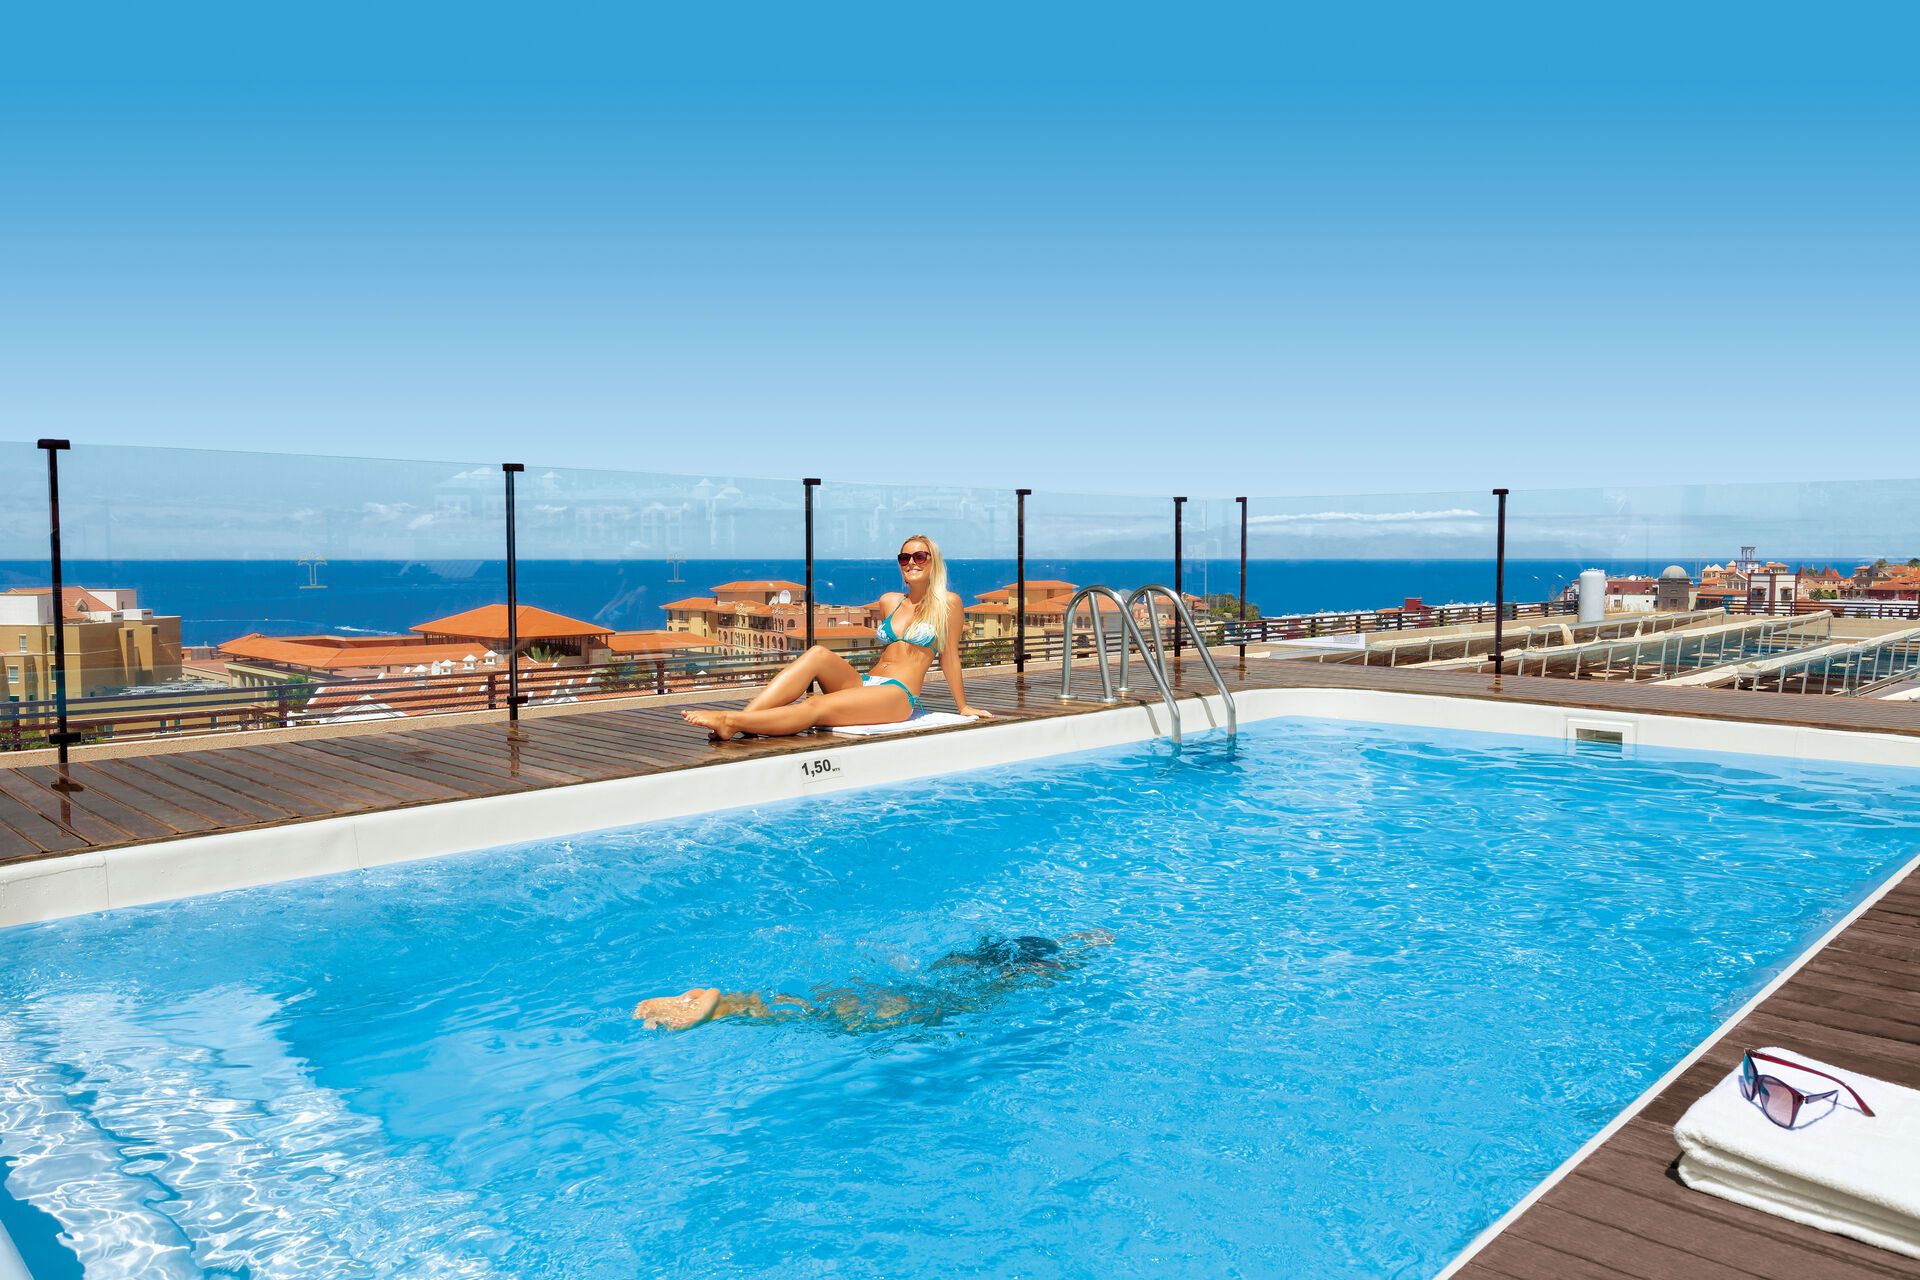 Canaries - Tenerife - Espagne - Hôtel Fañabe Costa Sur 4*